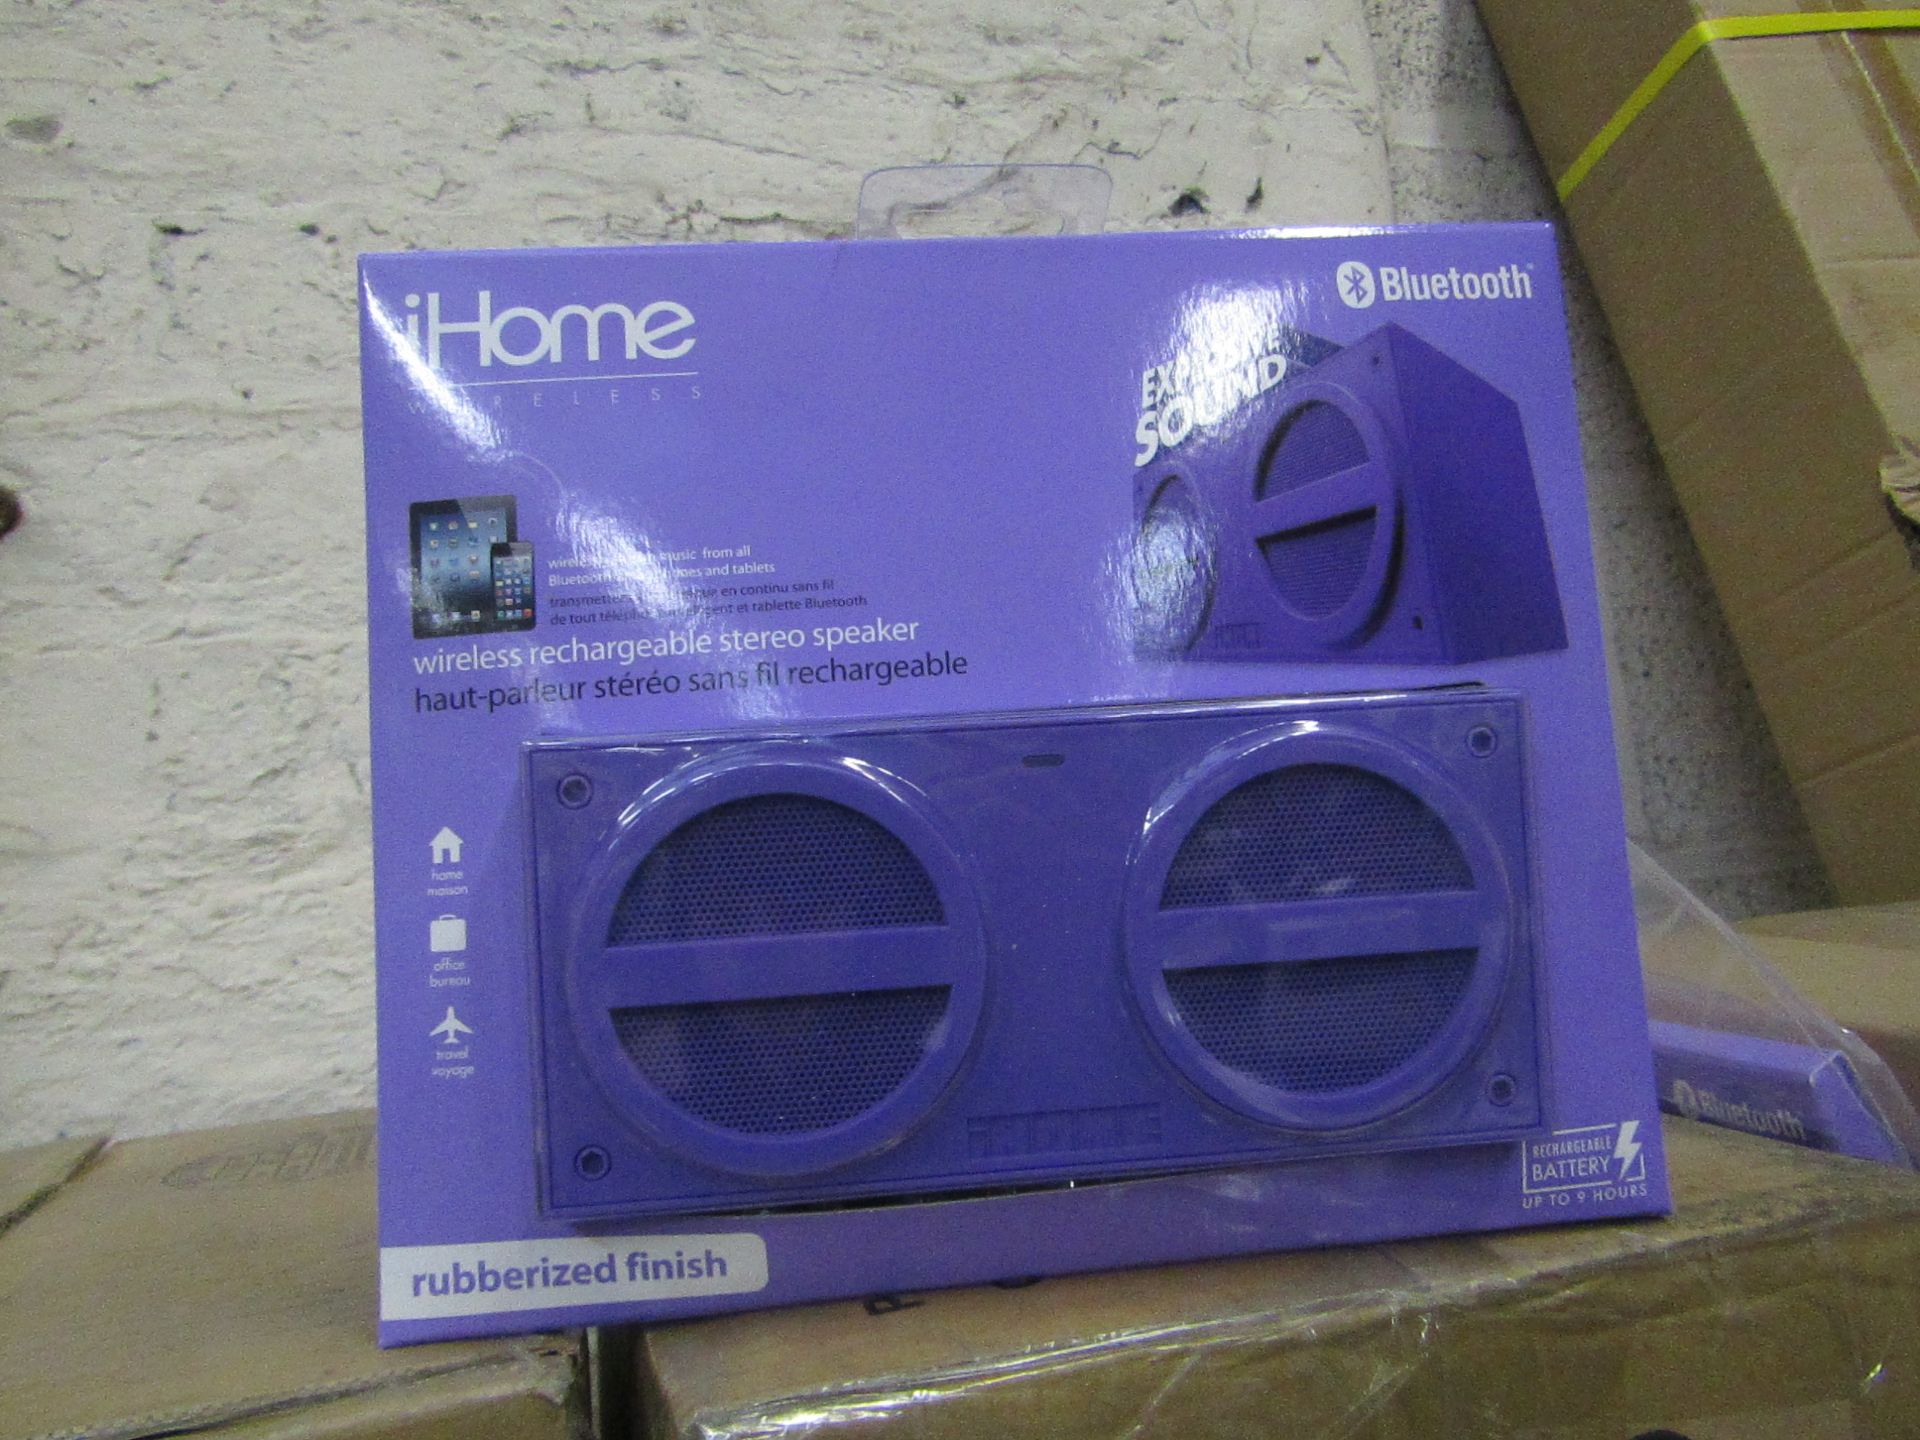 iHome wireless rechargeabke Blue tooth speaker, new